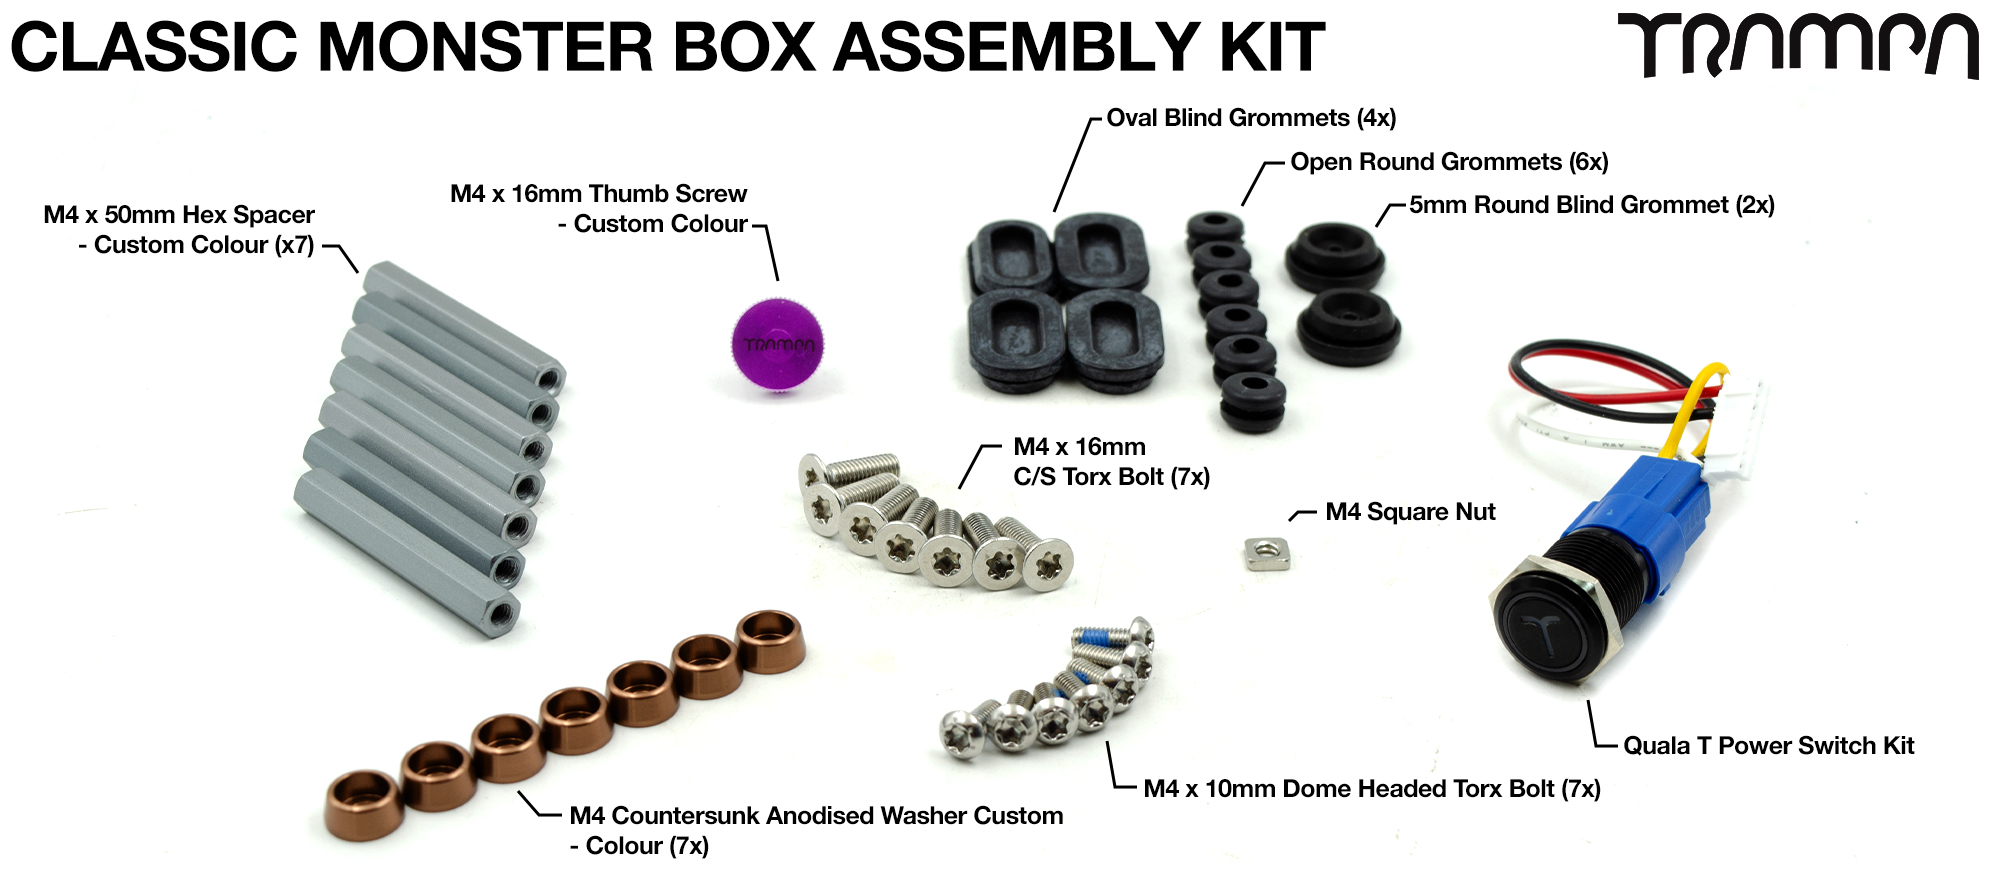 Classic Monster Box Assembly Kit